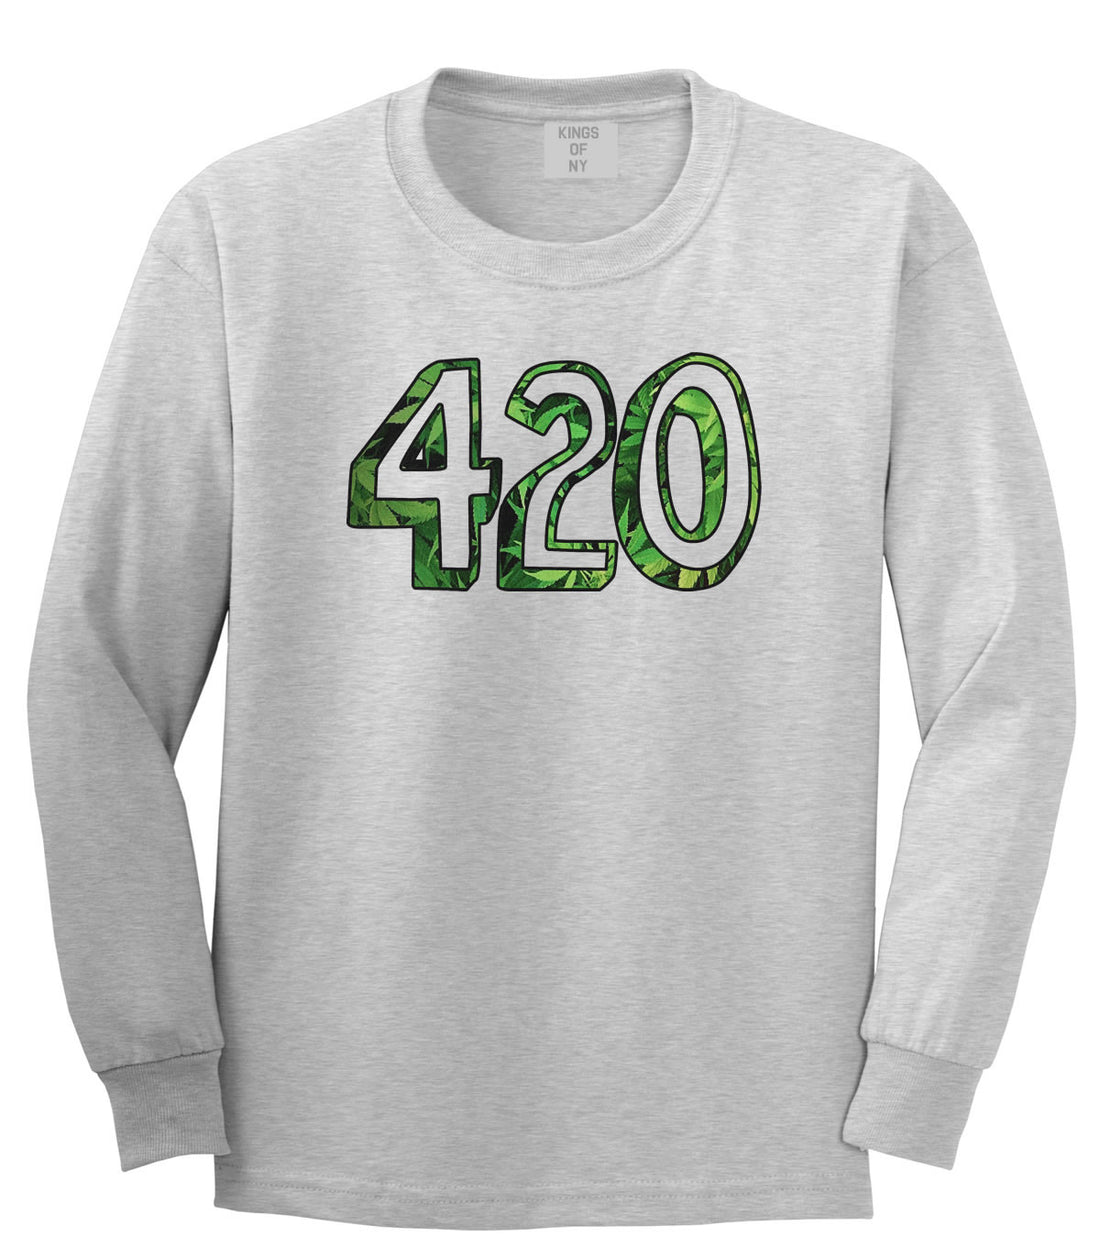  420 Weed Marijuana Print Long Sleeve T-Shirt in Grey by Kings Of NY